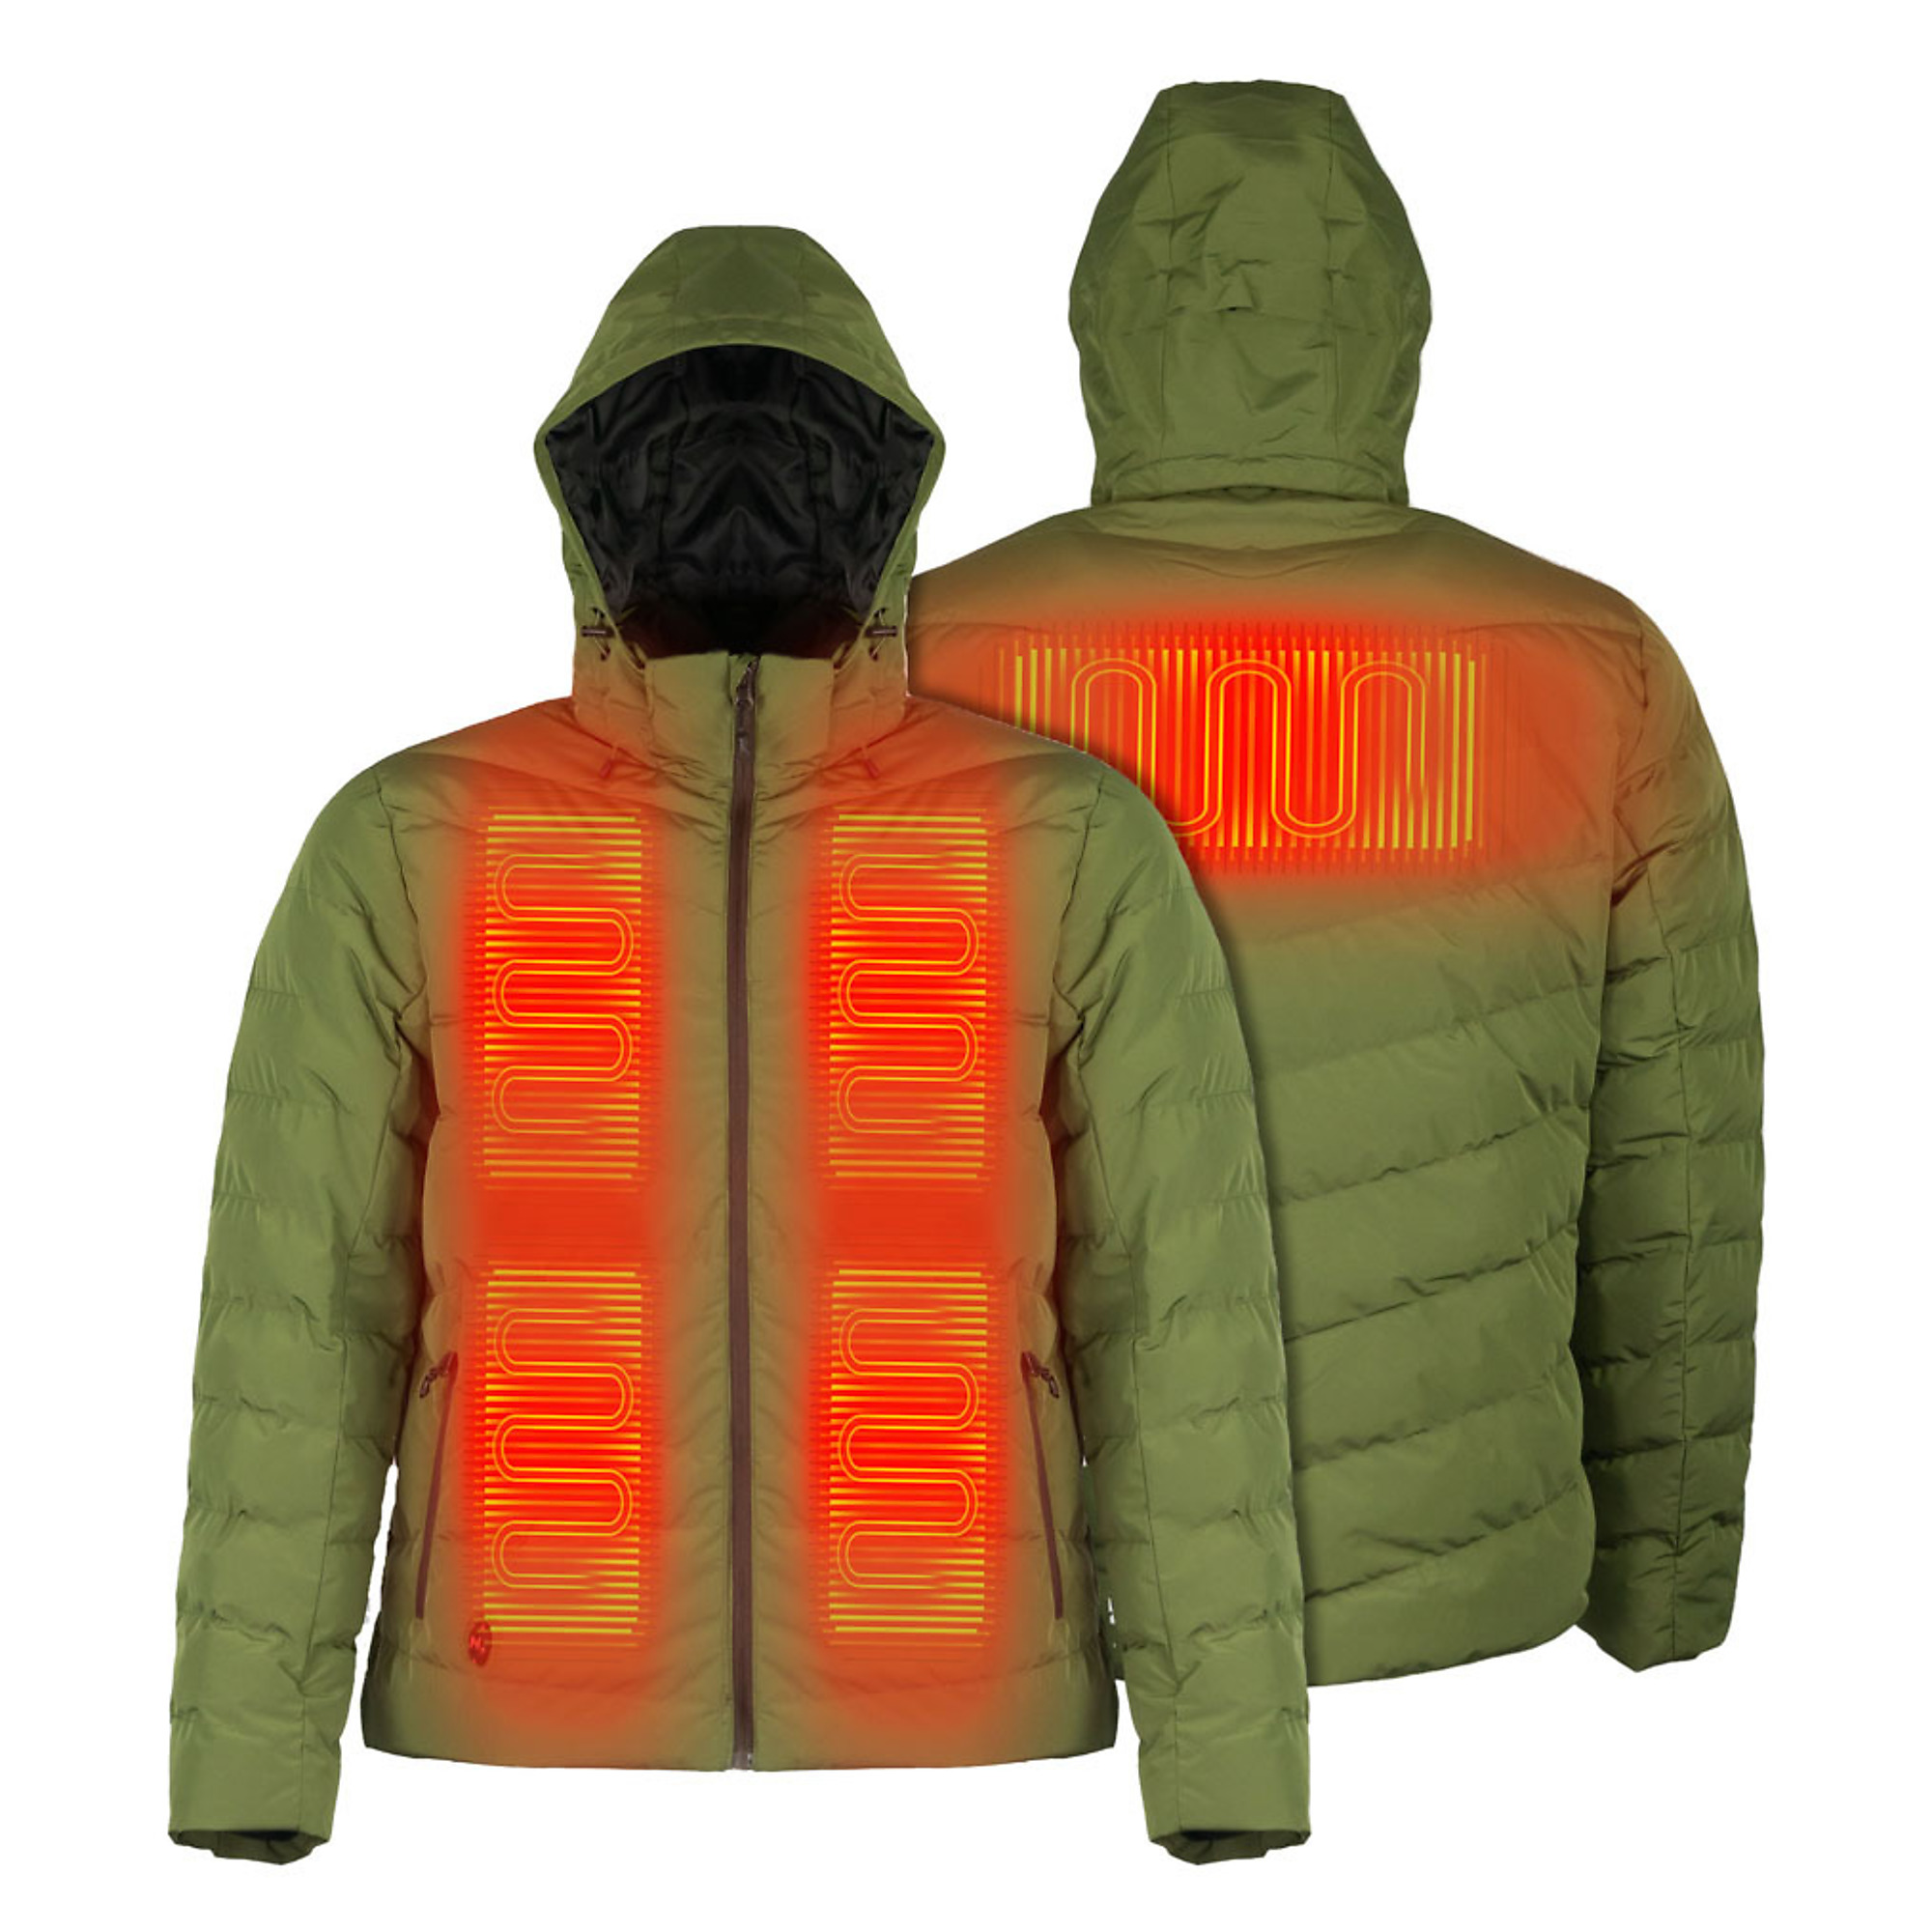 Fieldsheer, Men's Crest Heated Jacket with 7.4v Battery, Size S, Color Olive Green, Model MWMJ37110222